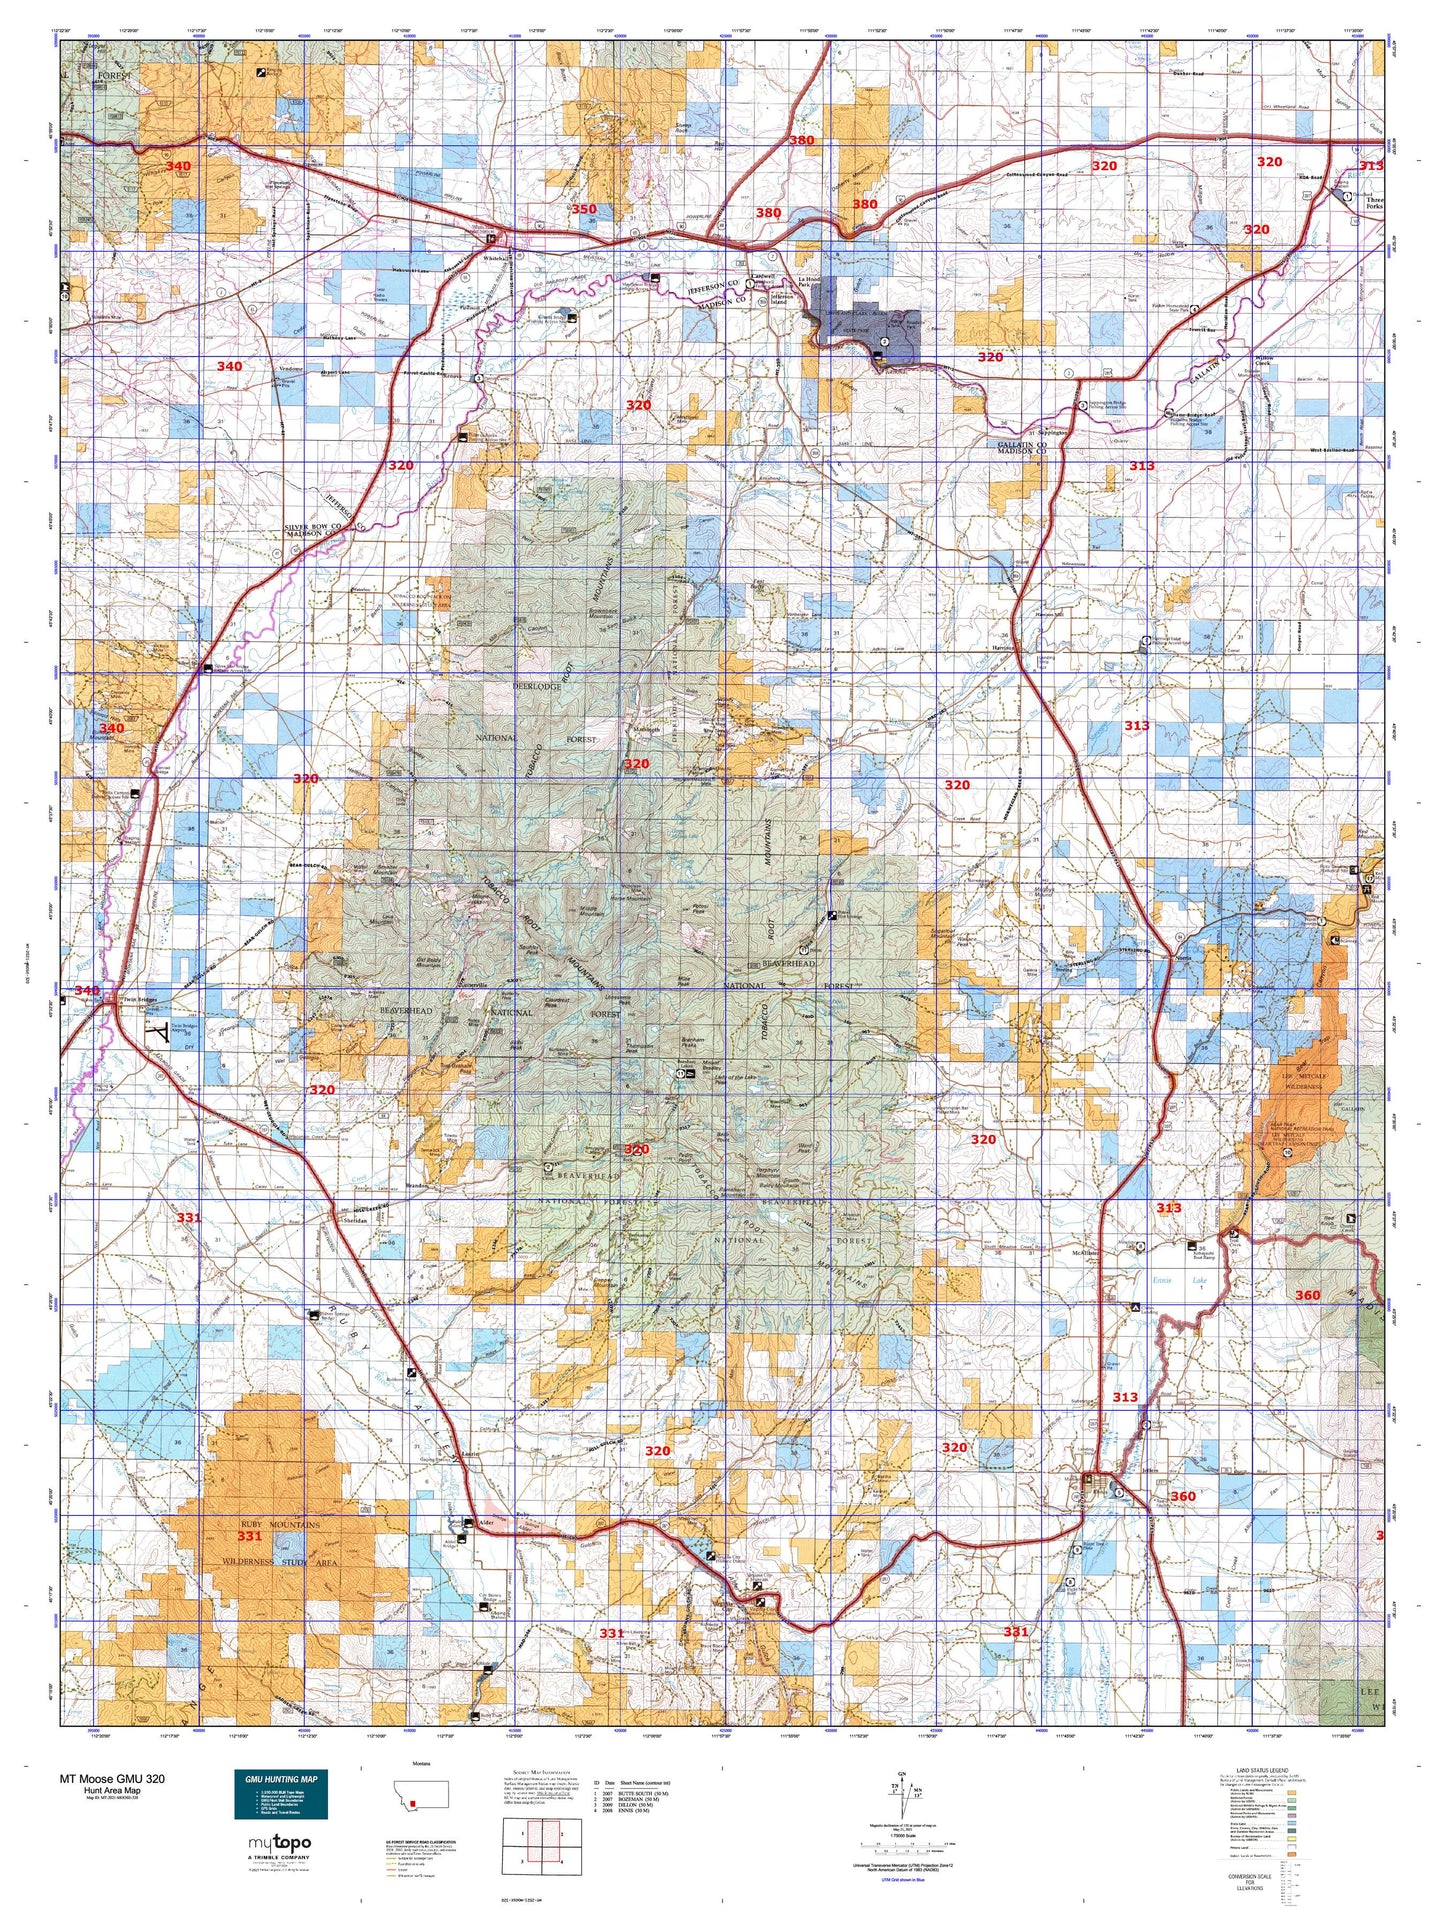 Montana Moose GMU 320 Map Image